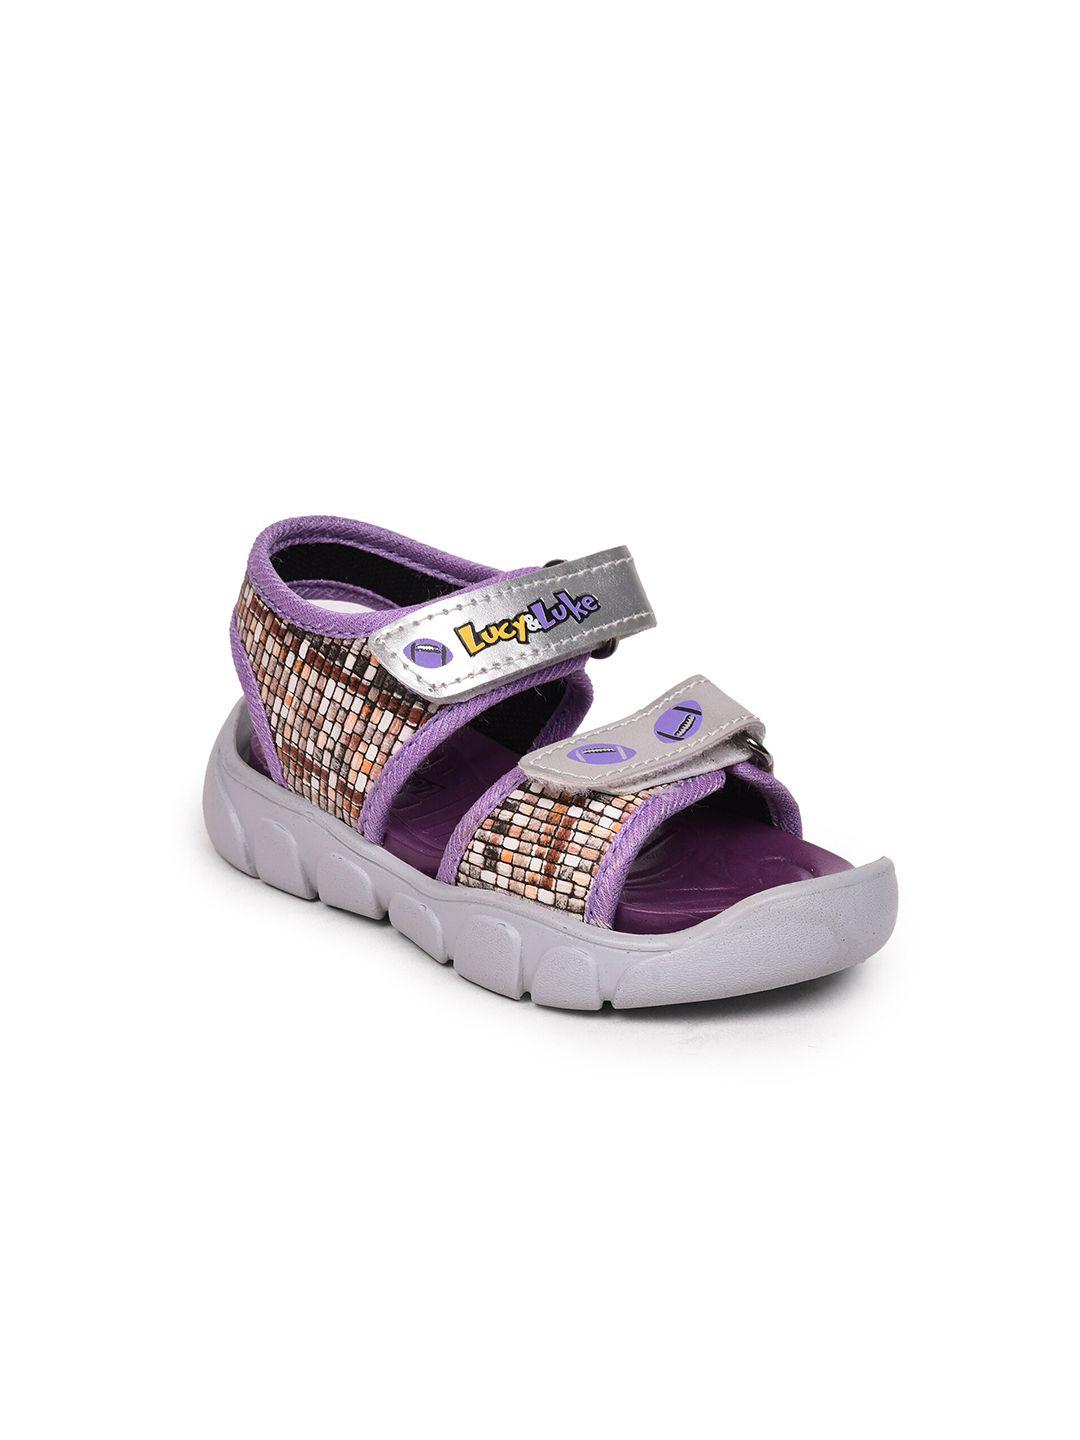 liberty-kids-purple-printed-sports-sandal